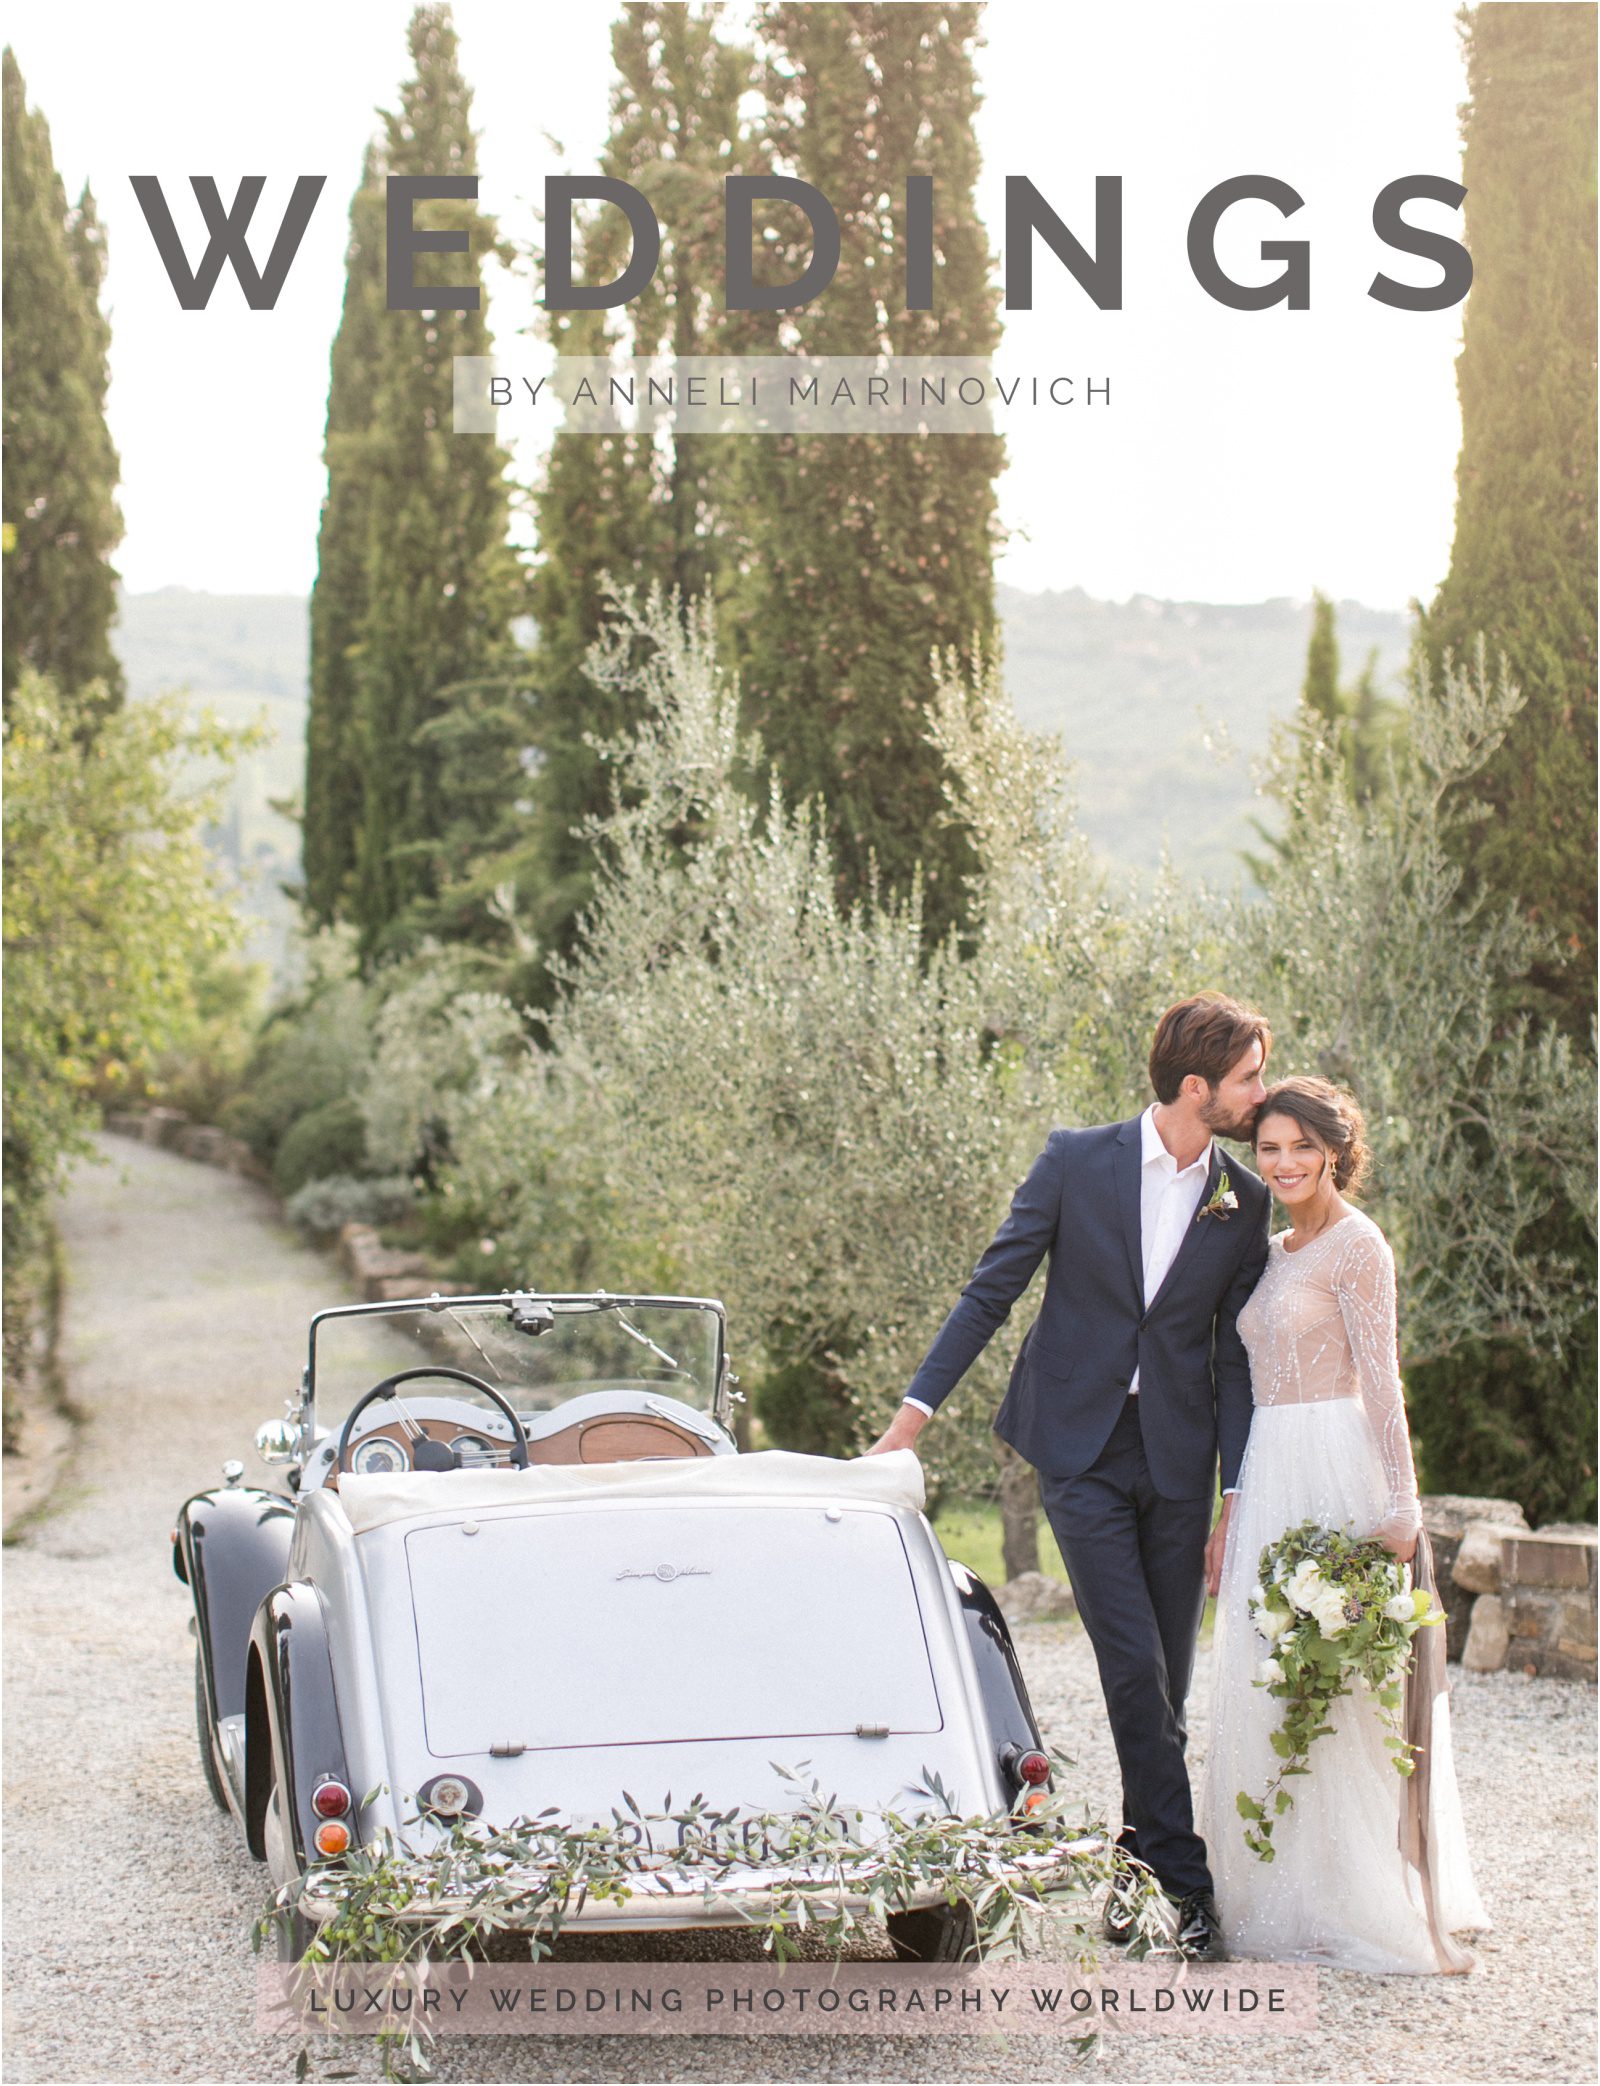 Luxury Destination Wedding Photography Brochure